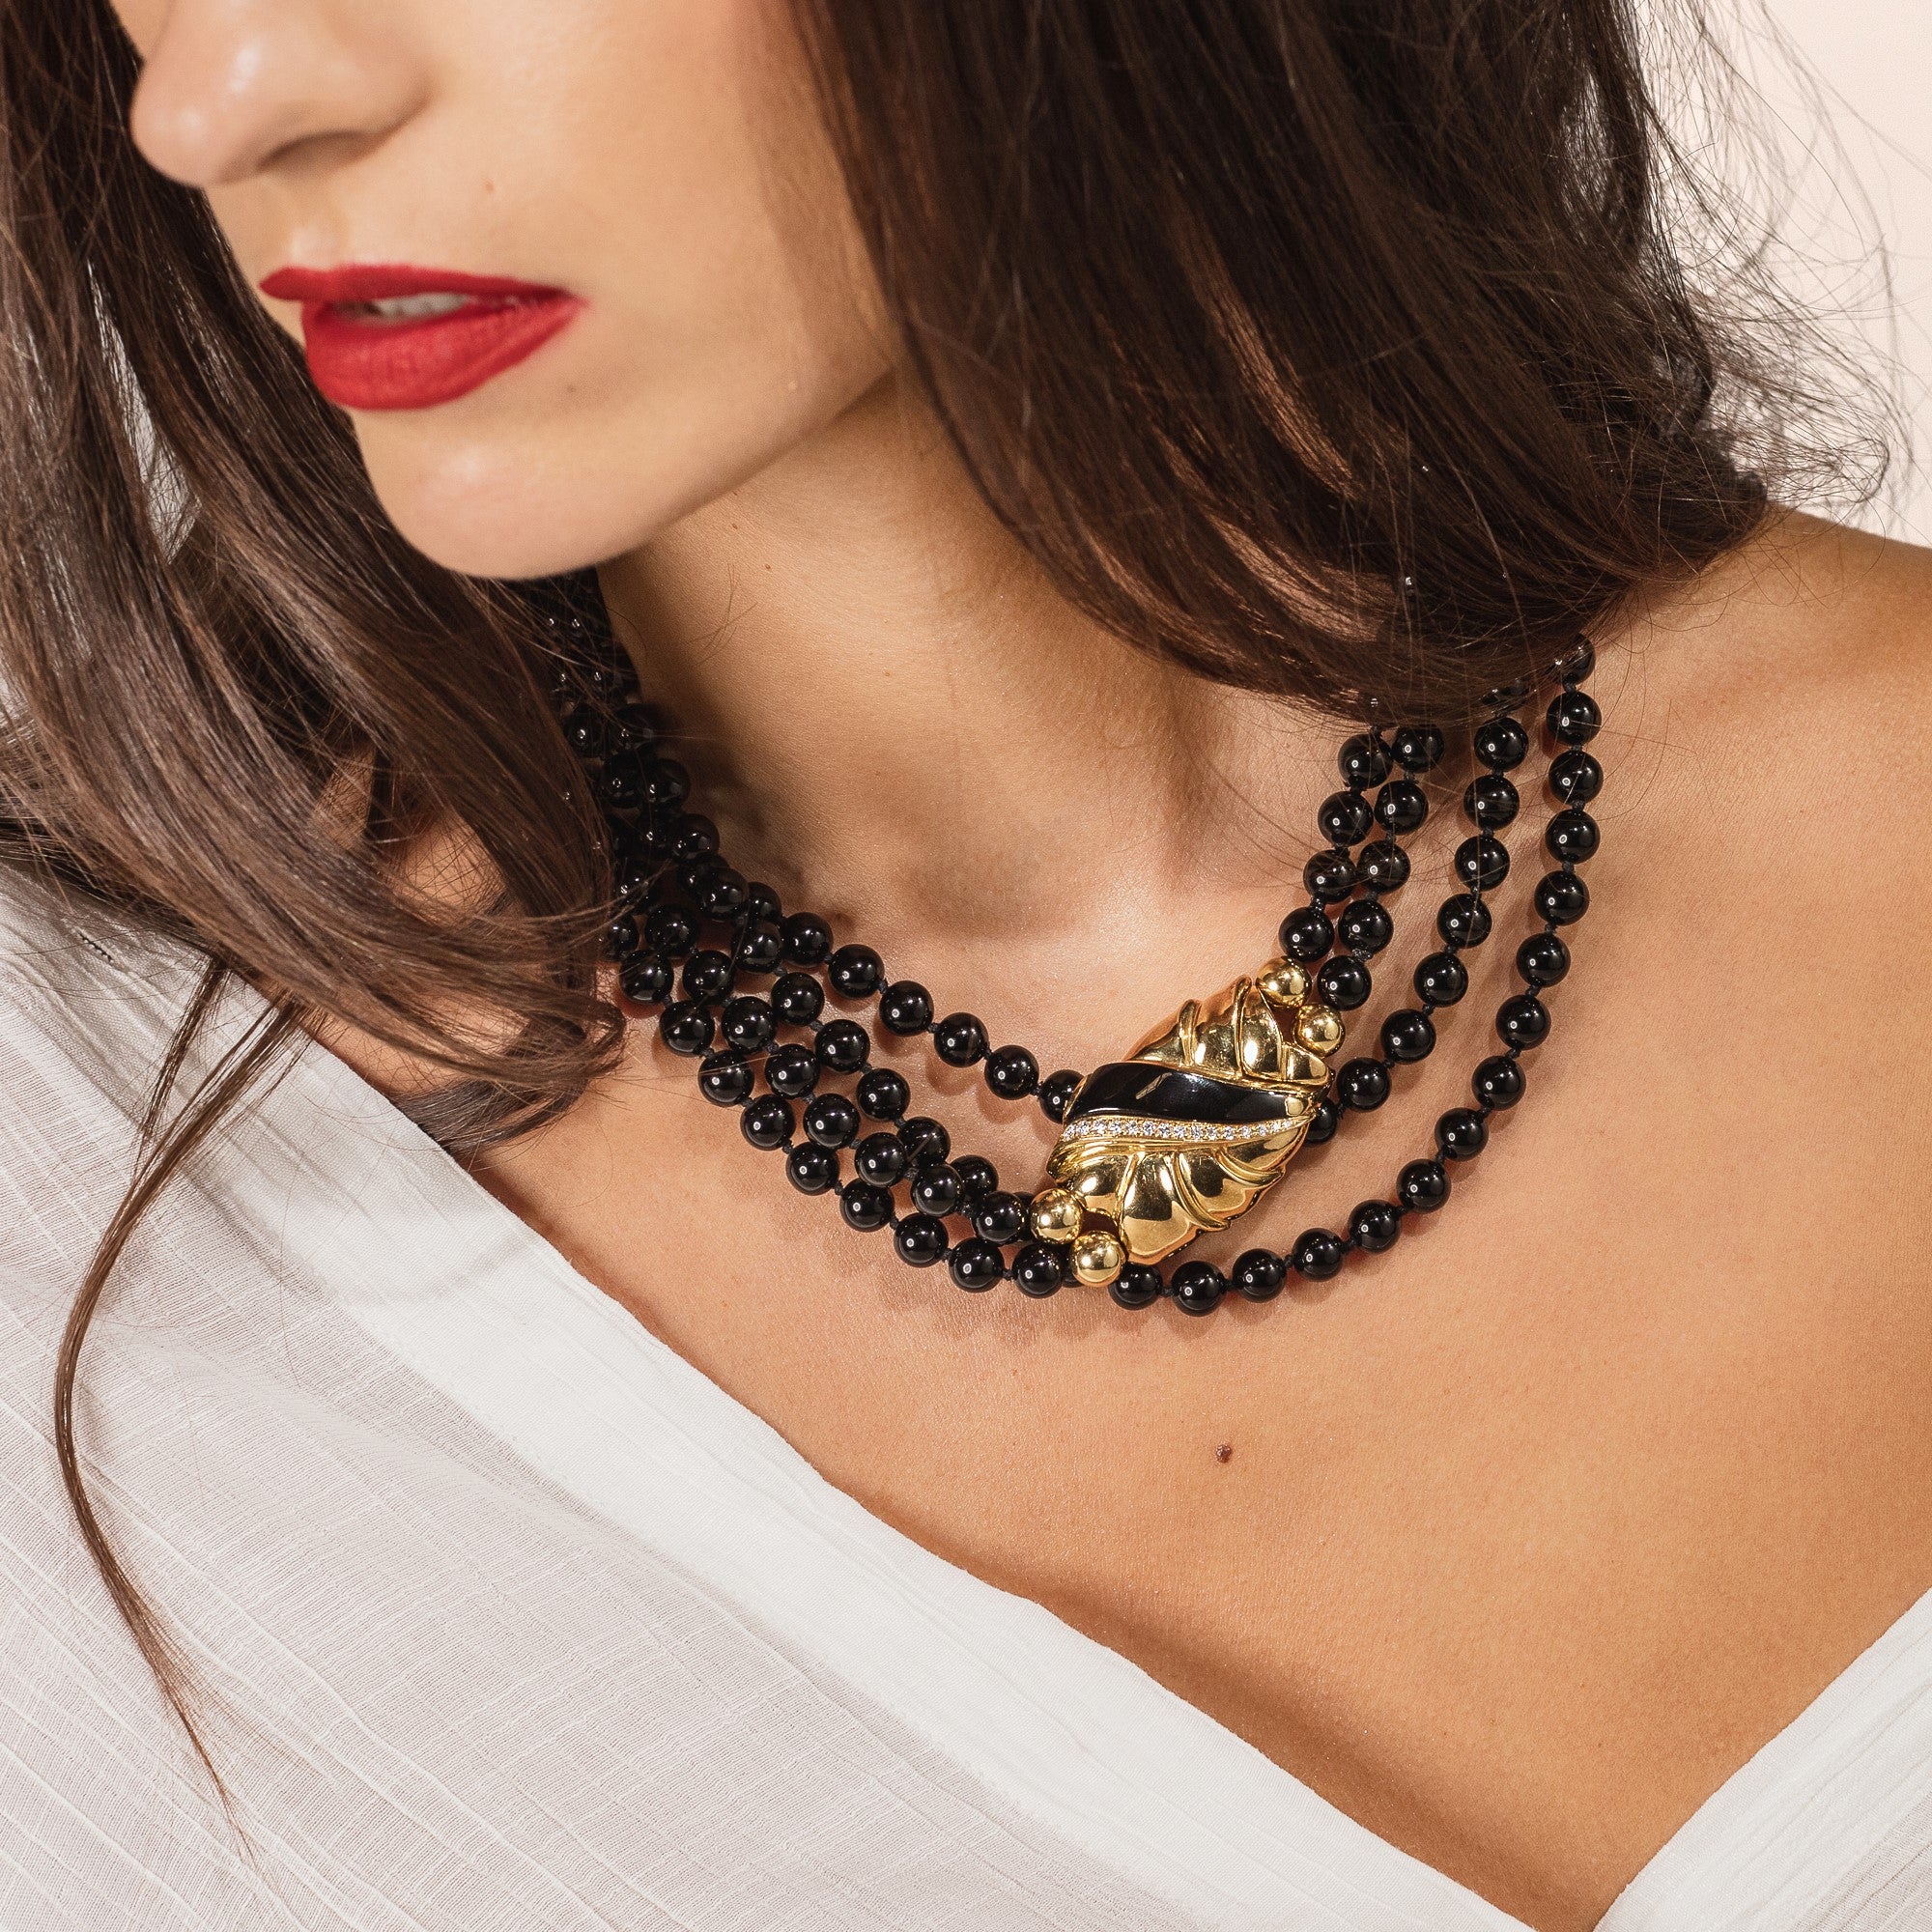 Italian black onyx beaded necklace worn short around woman’s neck. 